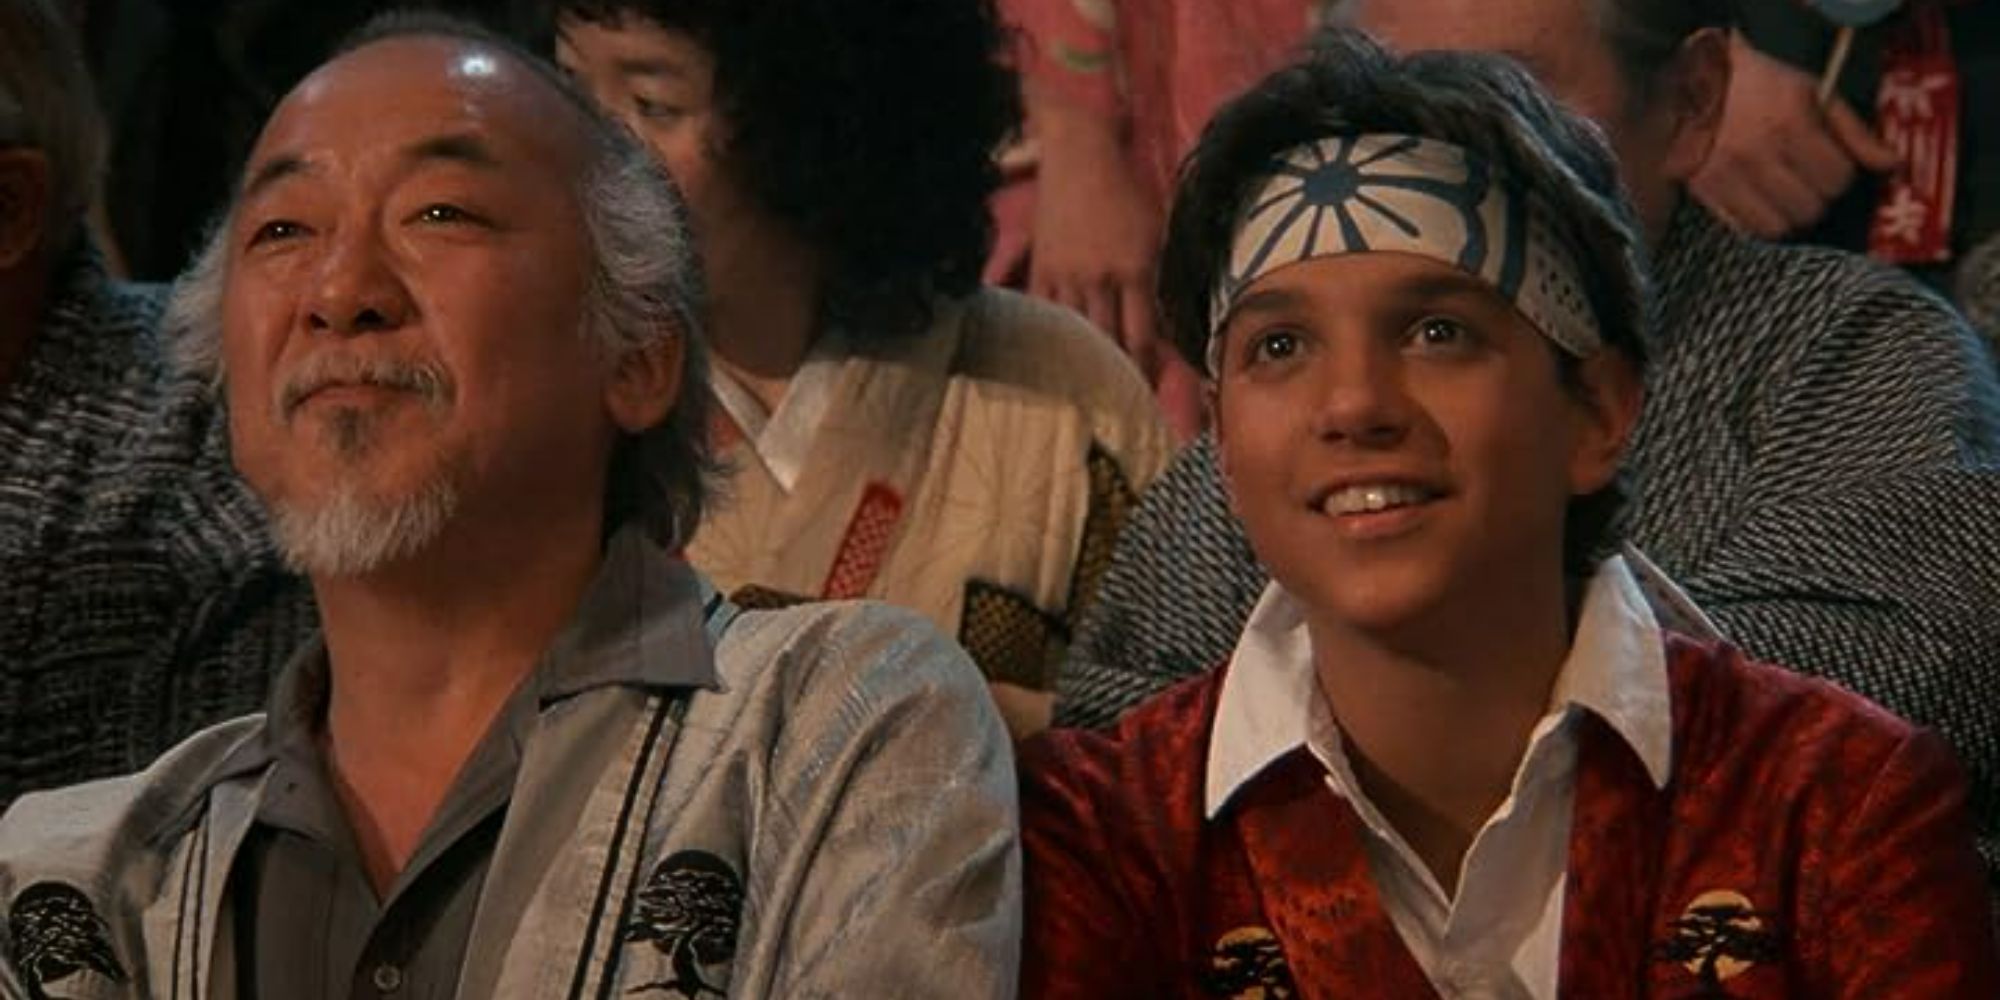 Mr. Miyagi (Pat Morito) and Daniel (Ralph Macchio) smiling in The Karate Kid